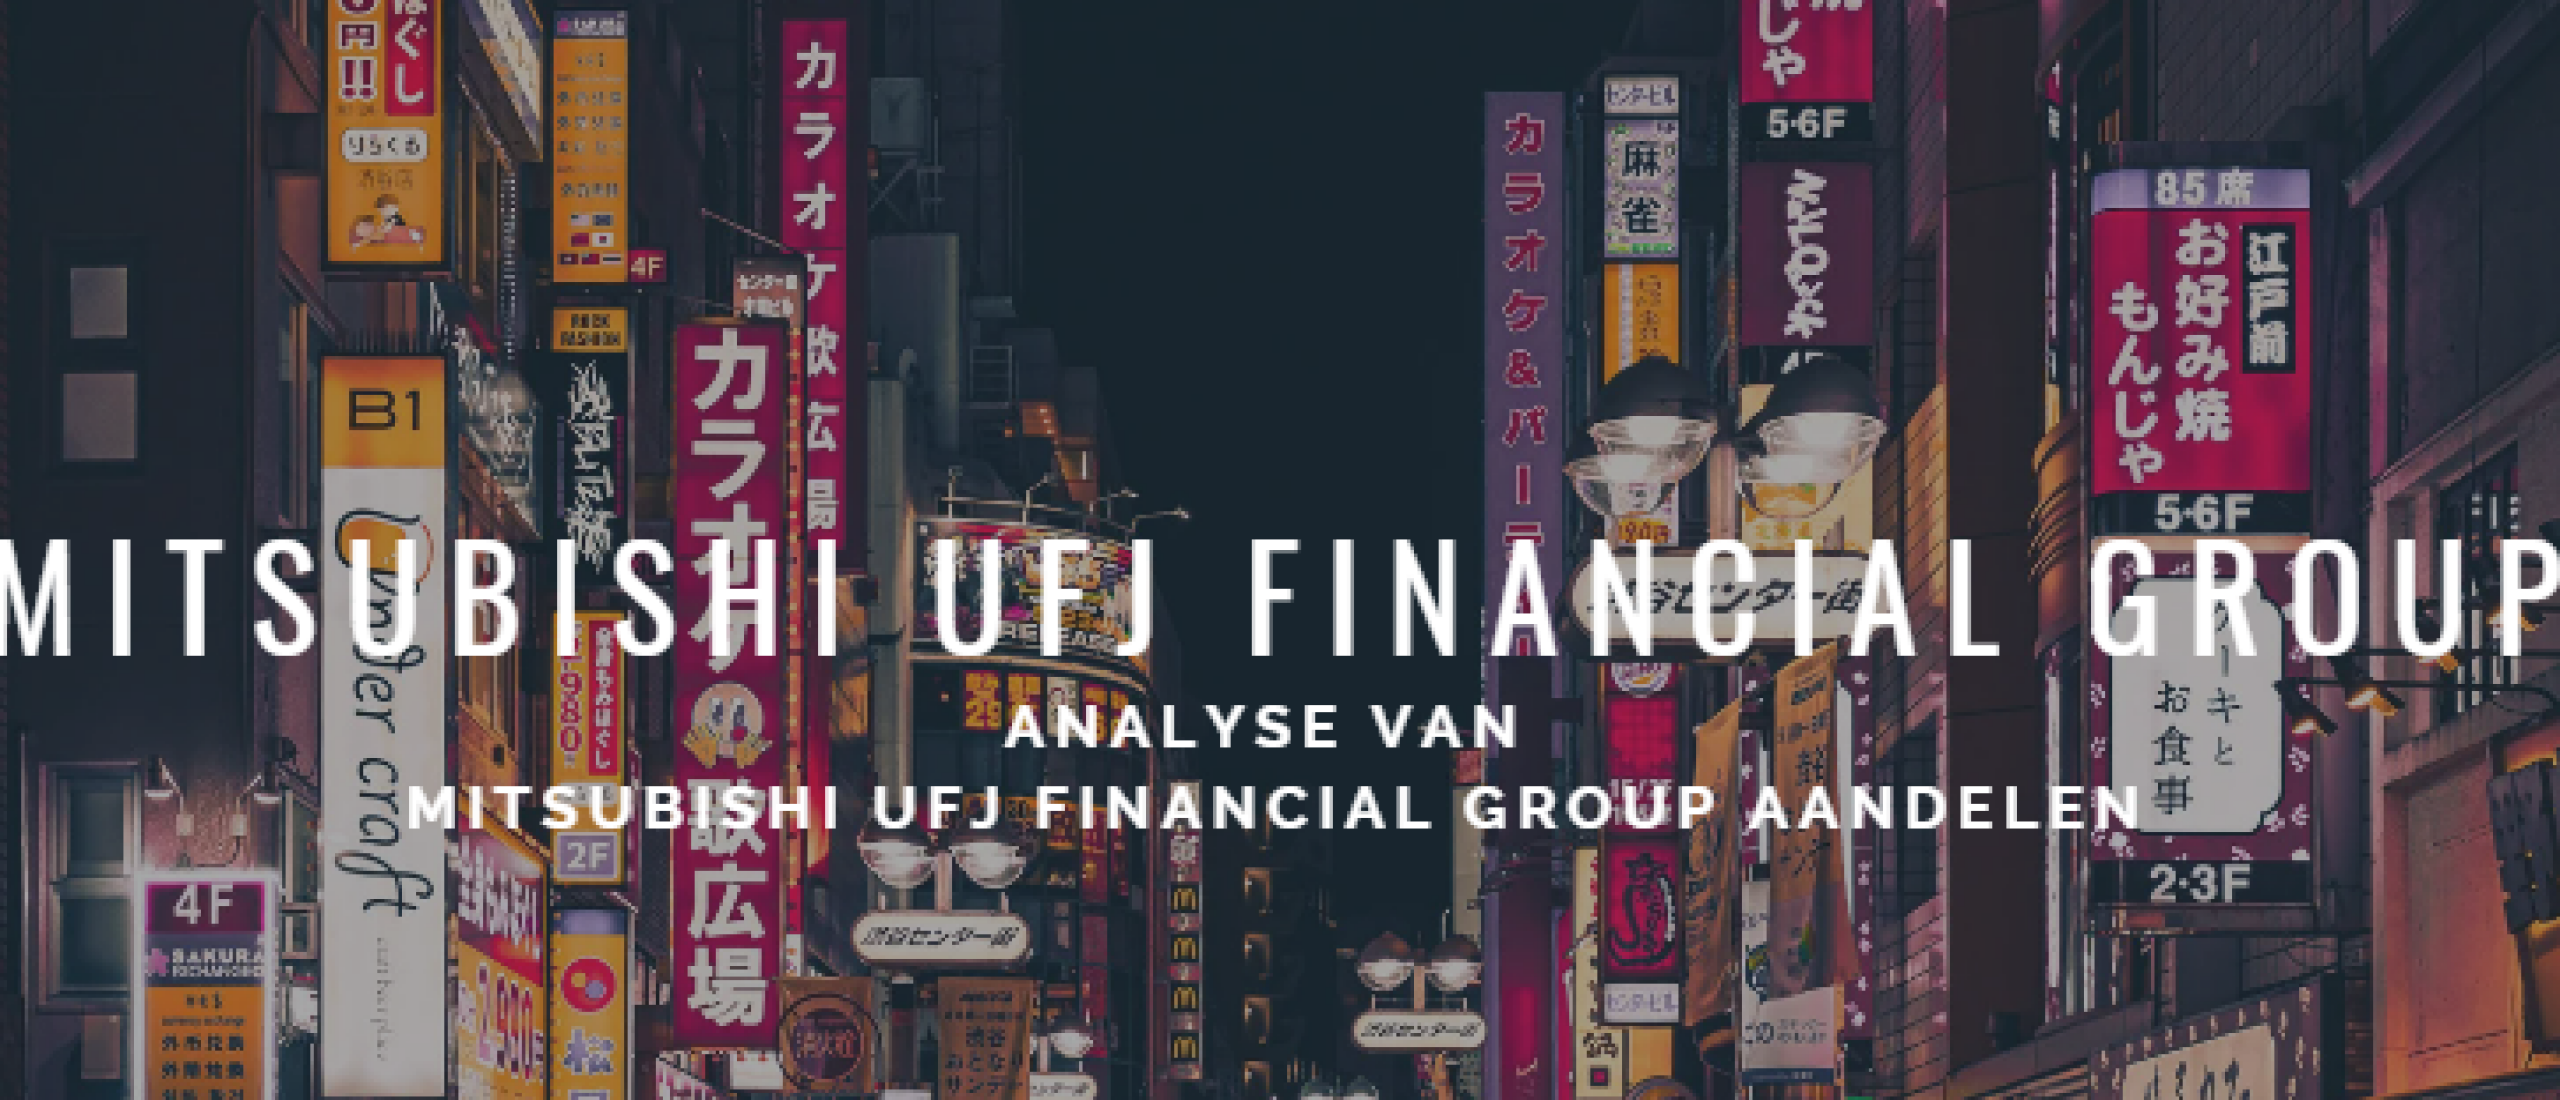 mitsubishi-ufj-financial-group-kopen-aandelen